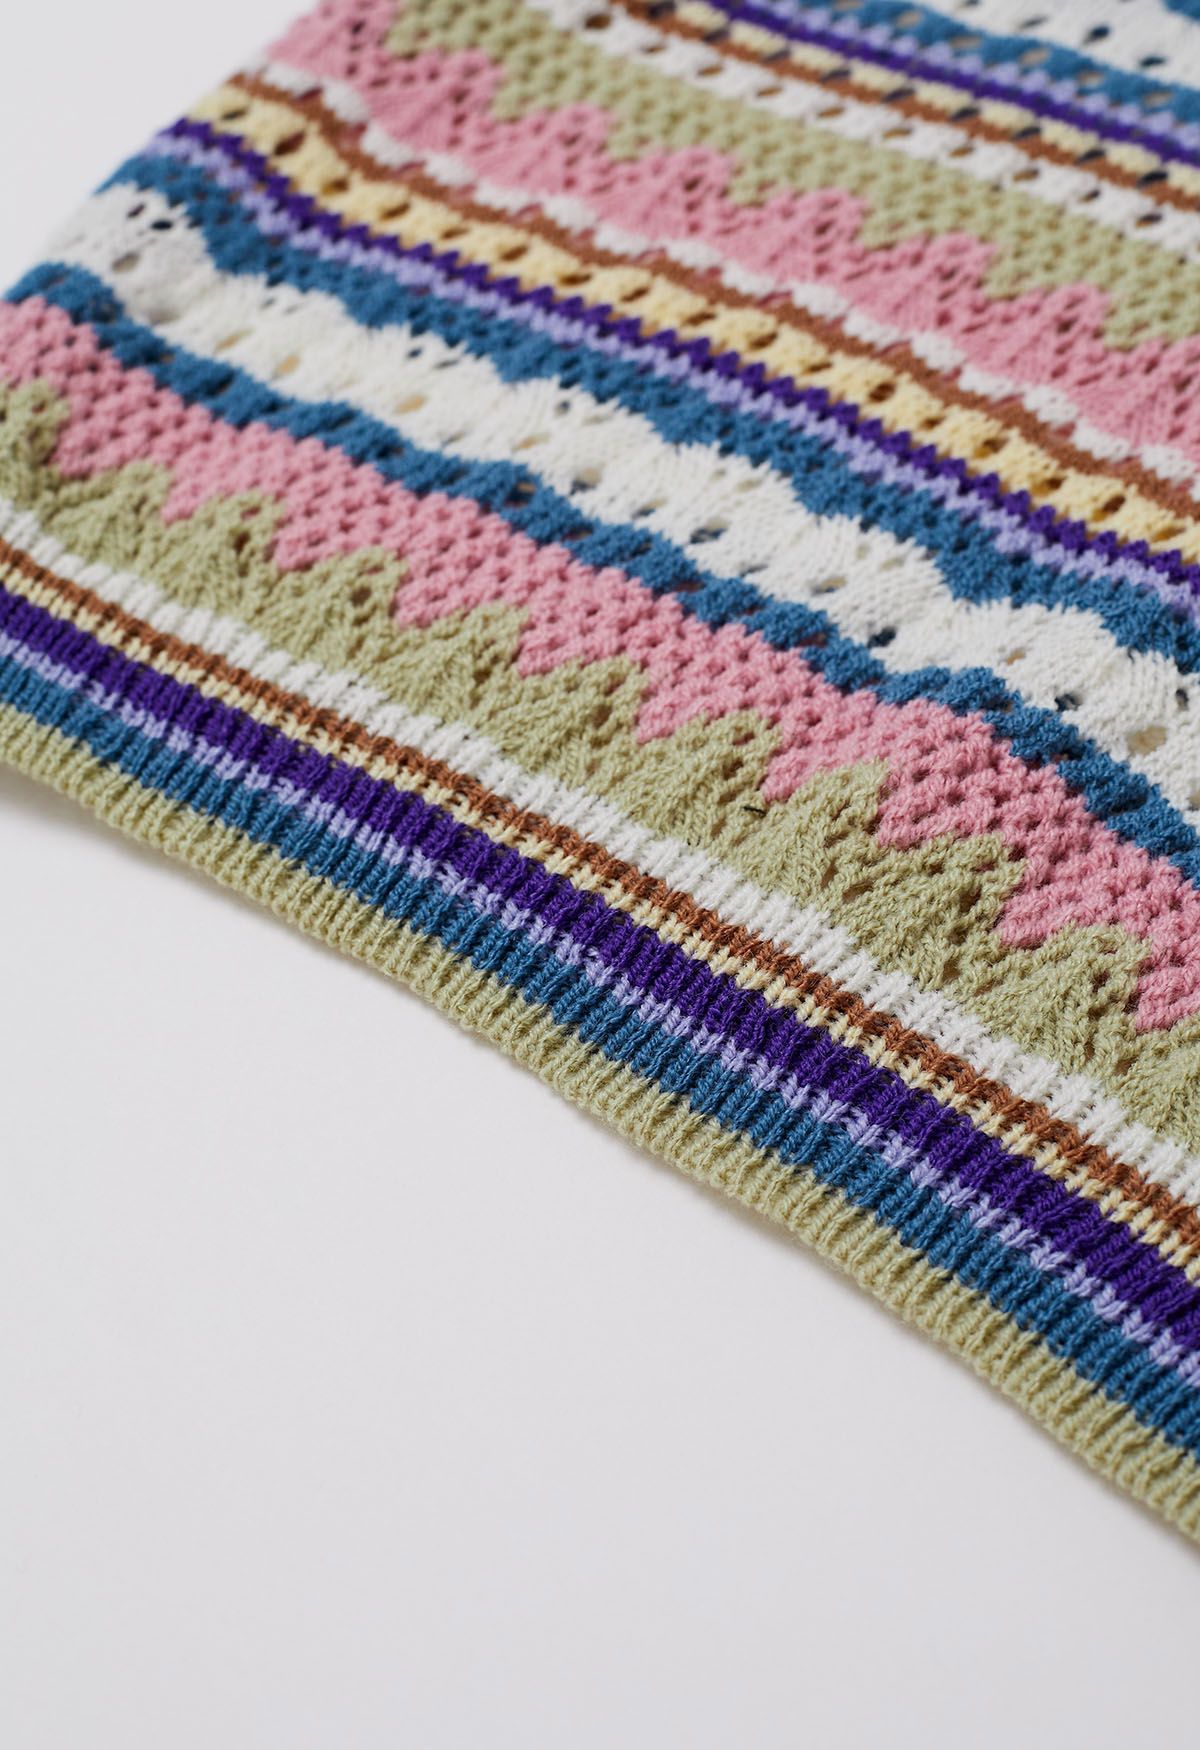 Multi Colored Stripe Pointelle Knit Top